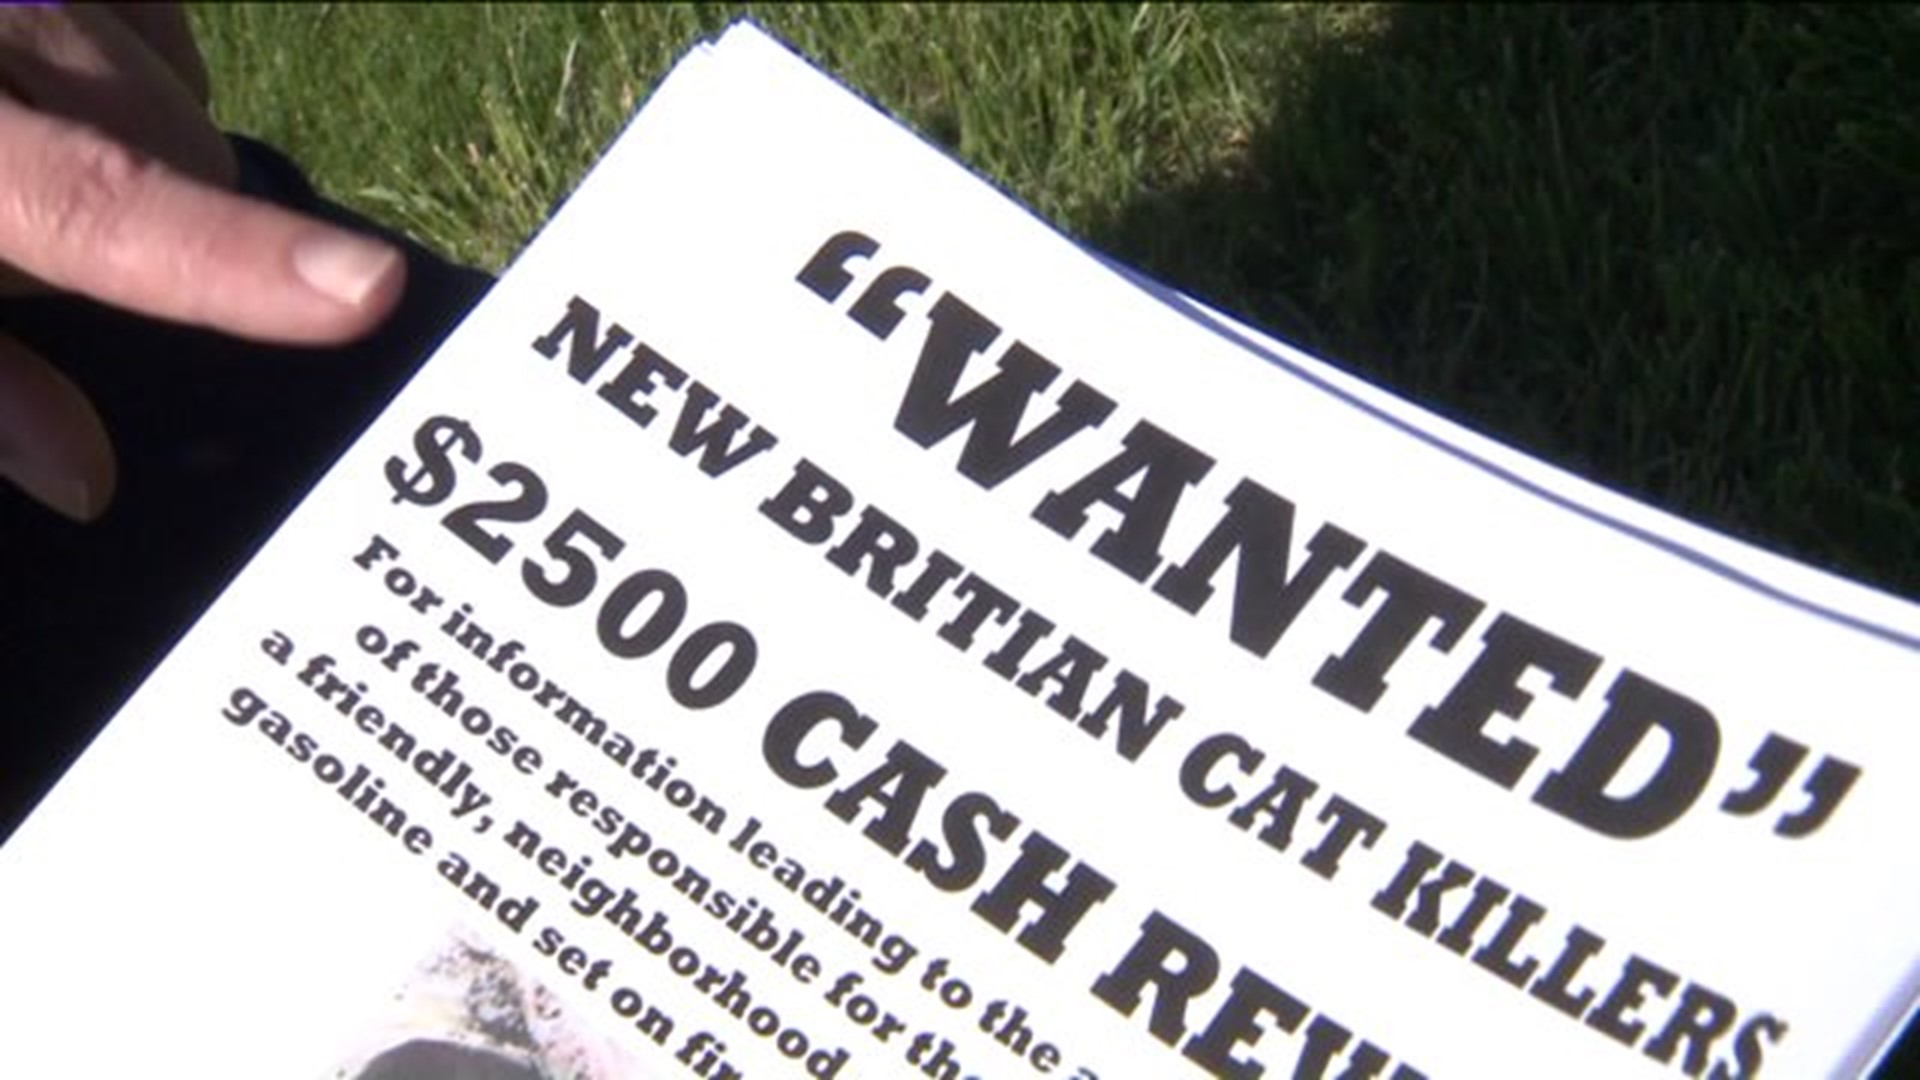 Plea for info about cat killer spreads in New Britain